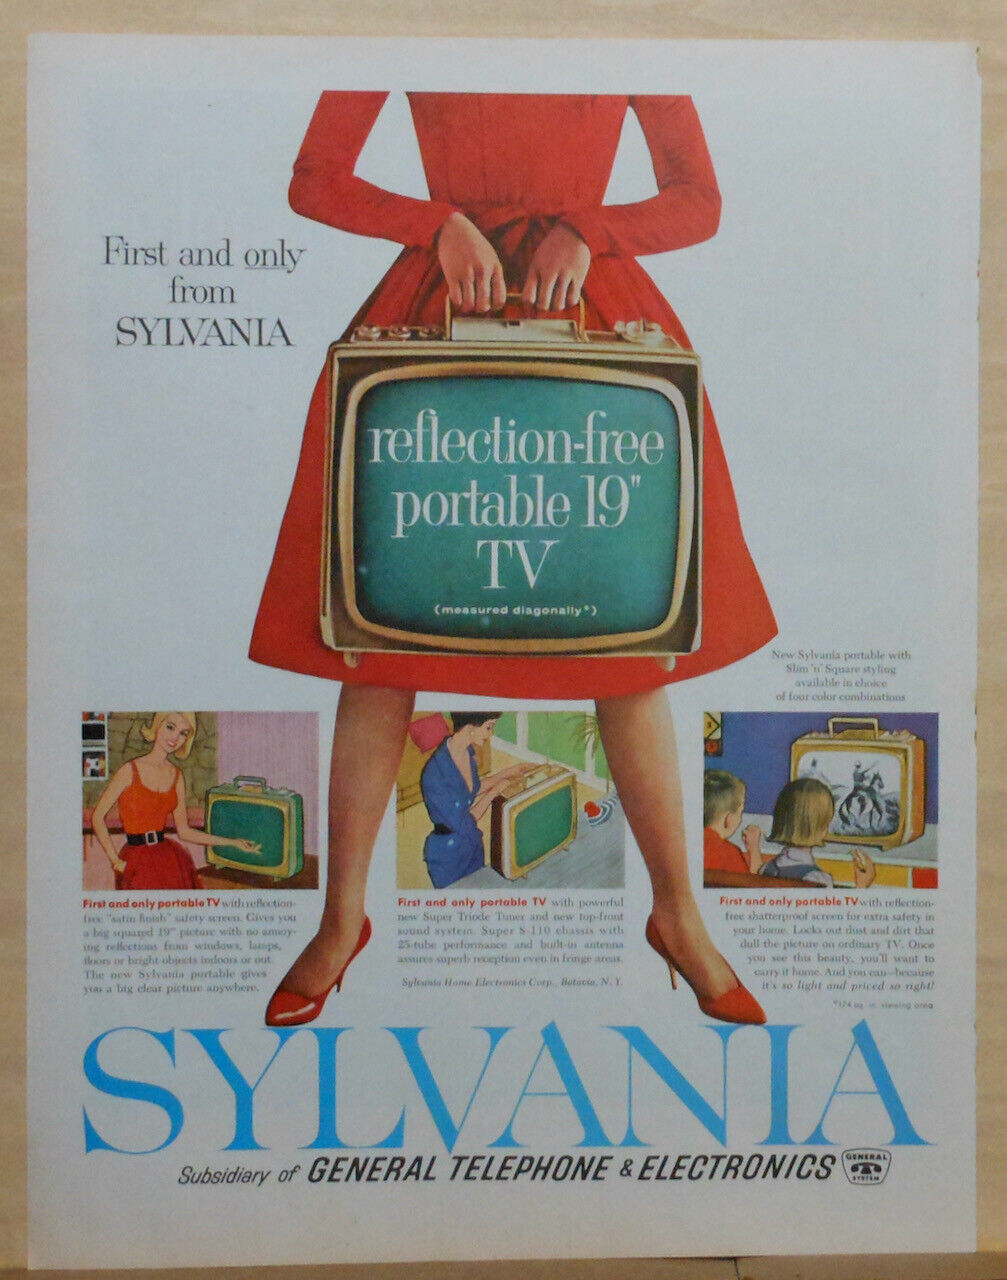 1960 magazine ad for Sylvania reflection free portable TV - 19 inch screen